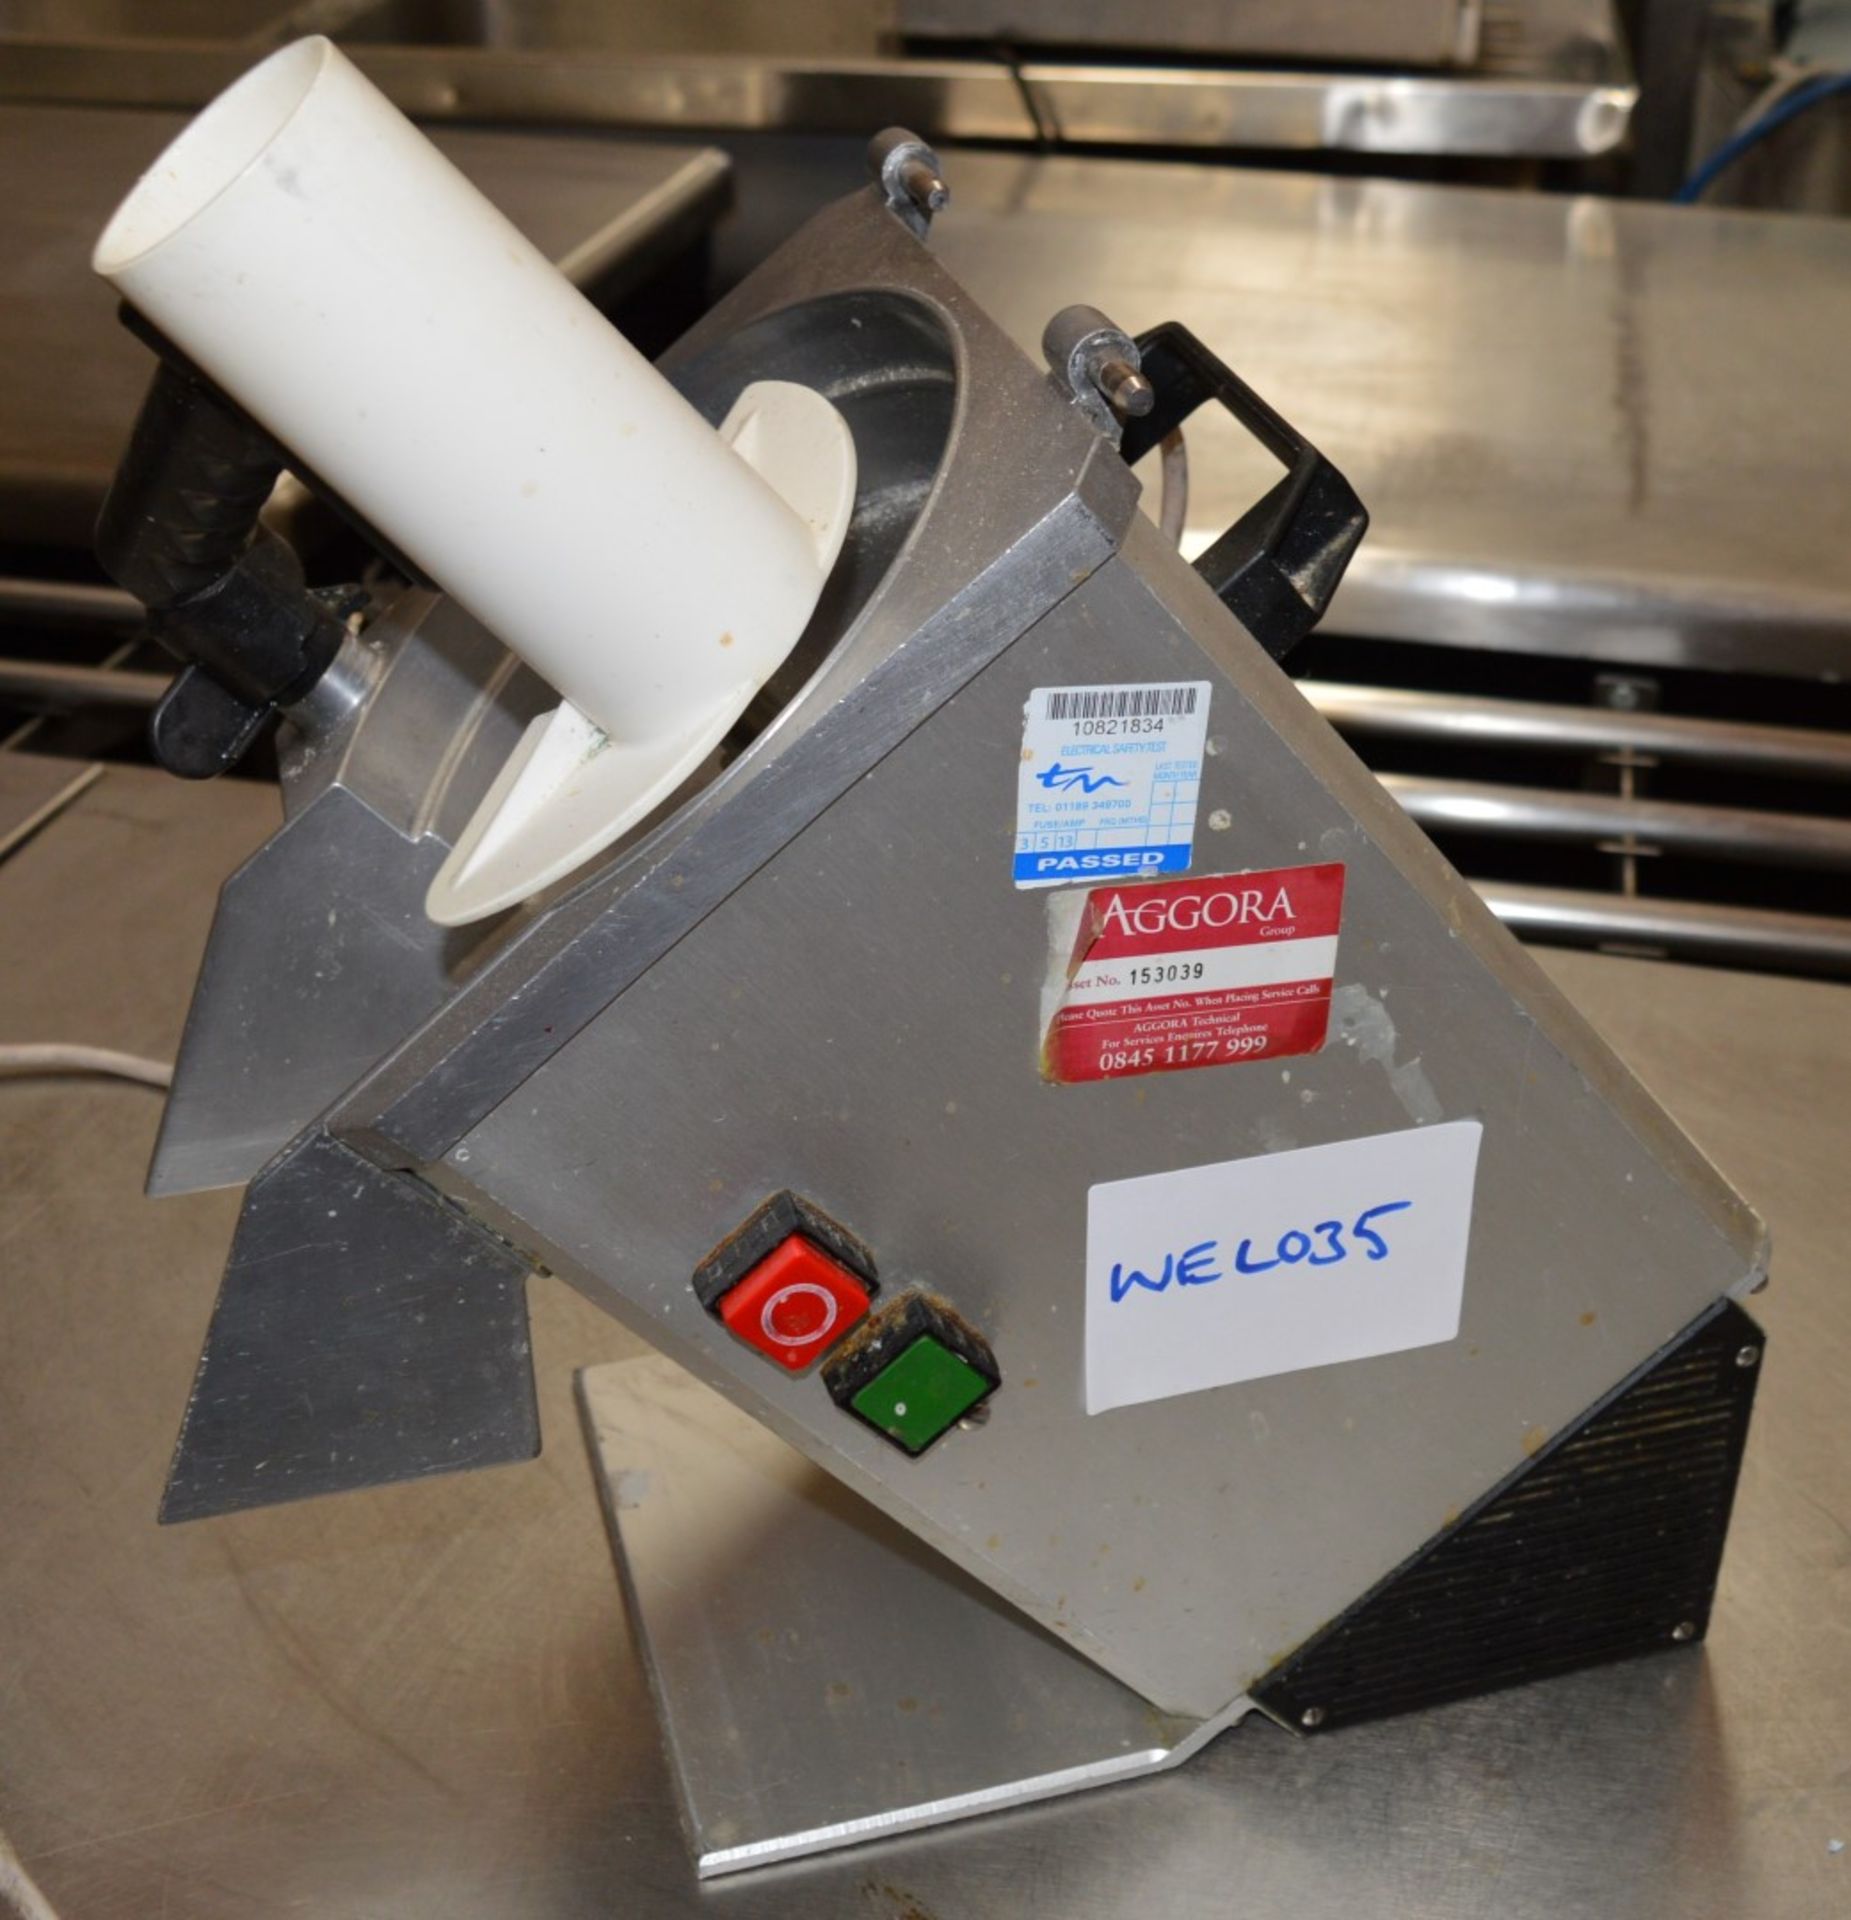 1 x Hobart vpu Vegetable Prep Machine - CL057 - Ref WEL035 - Commercial Catering Equipment - - Image 4 of 5